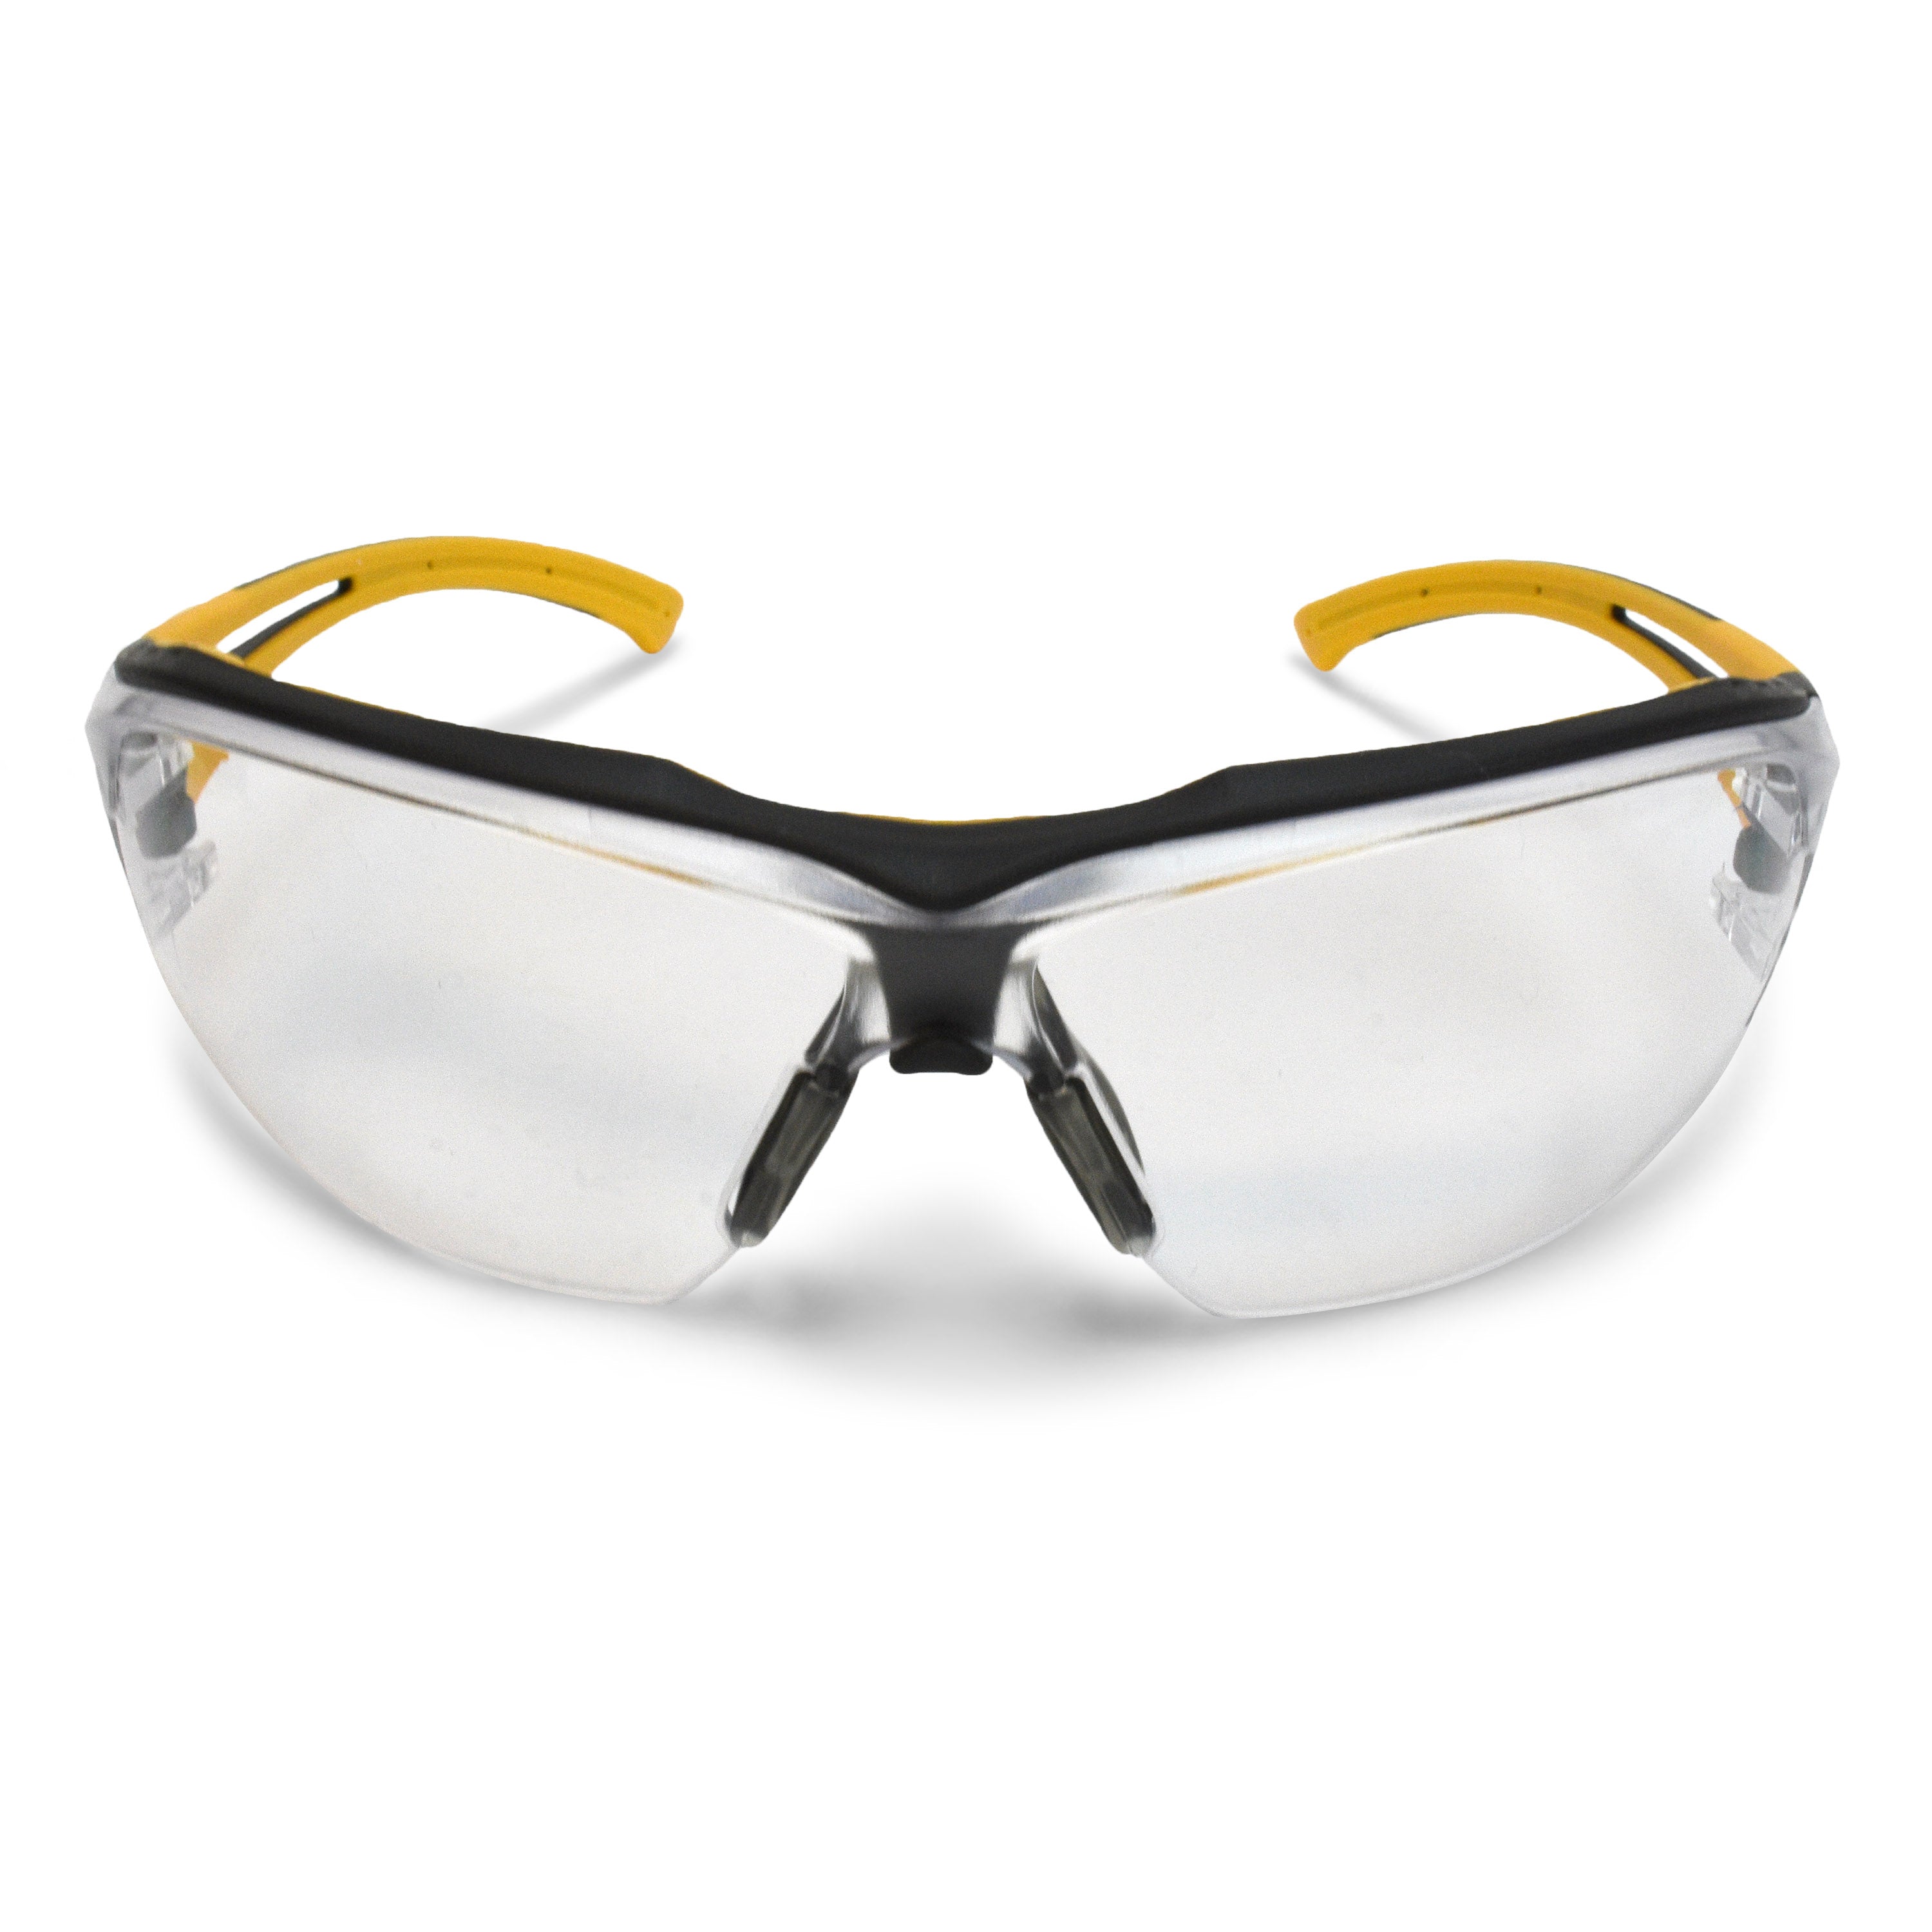 DeWALT Renovator Premium Safety Glasses (Box of 12)